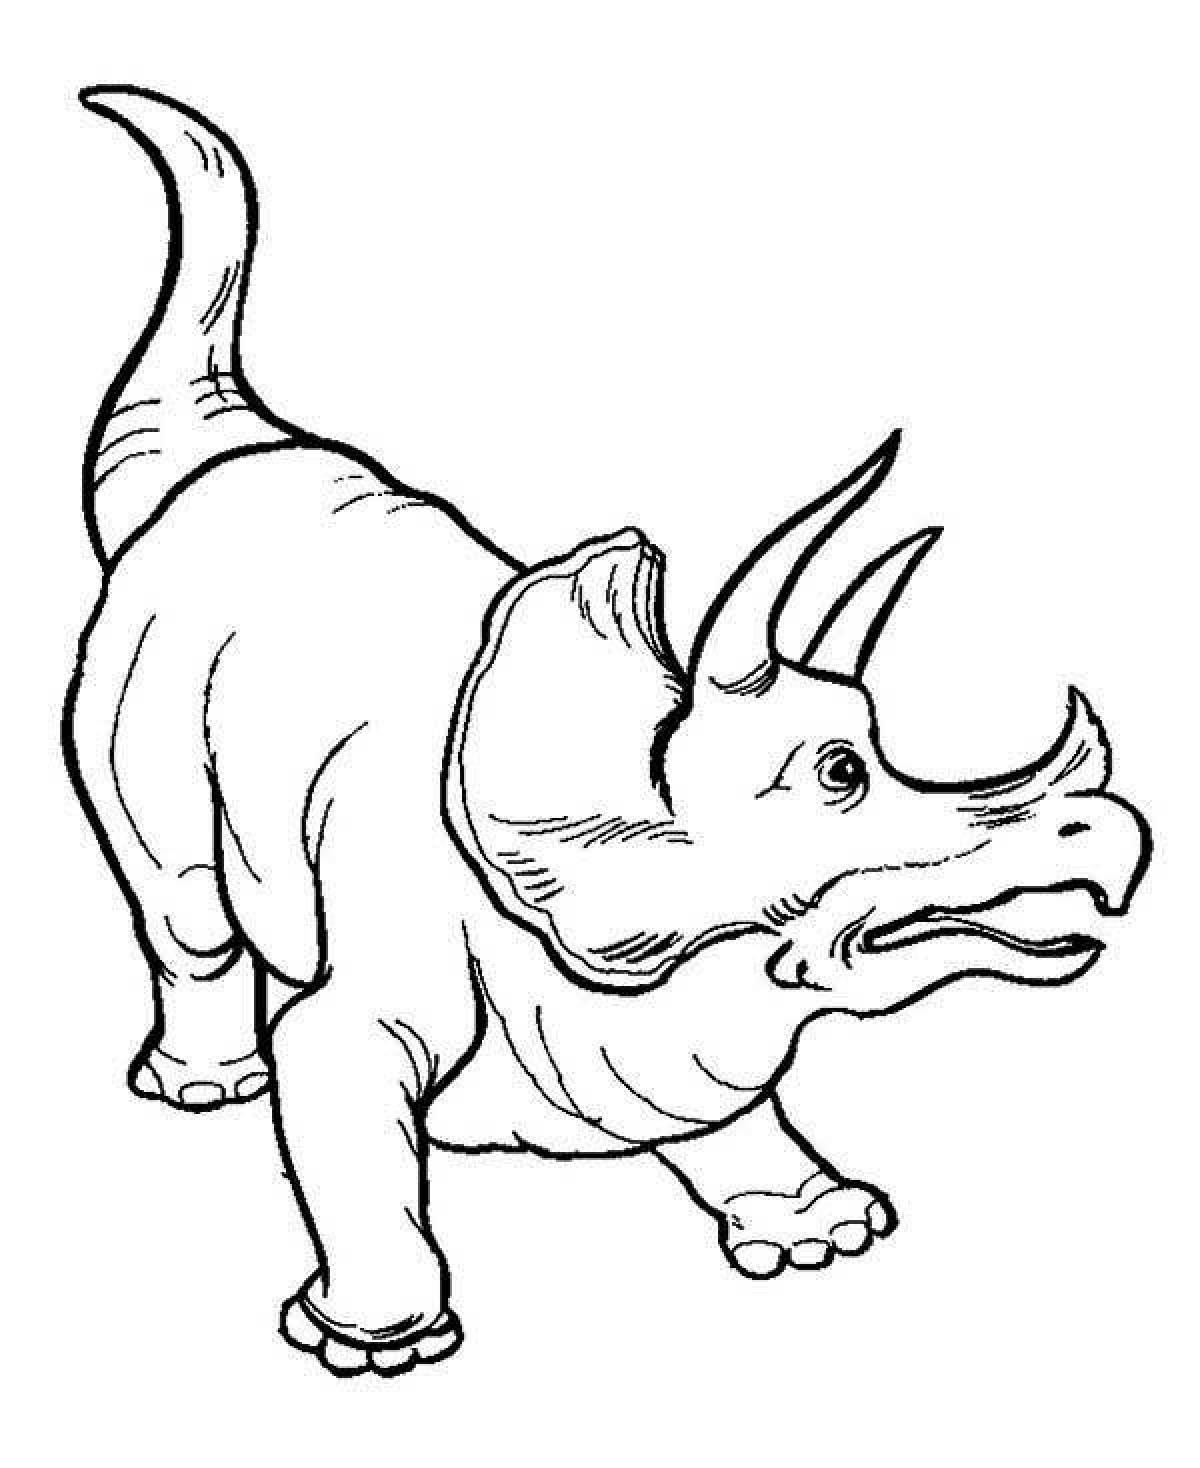 Coloring book nice triceratops dinosaur